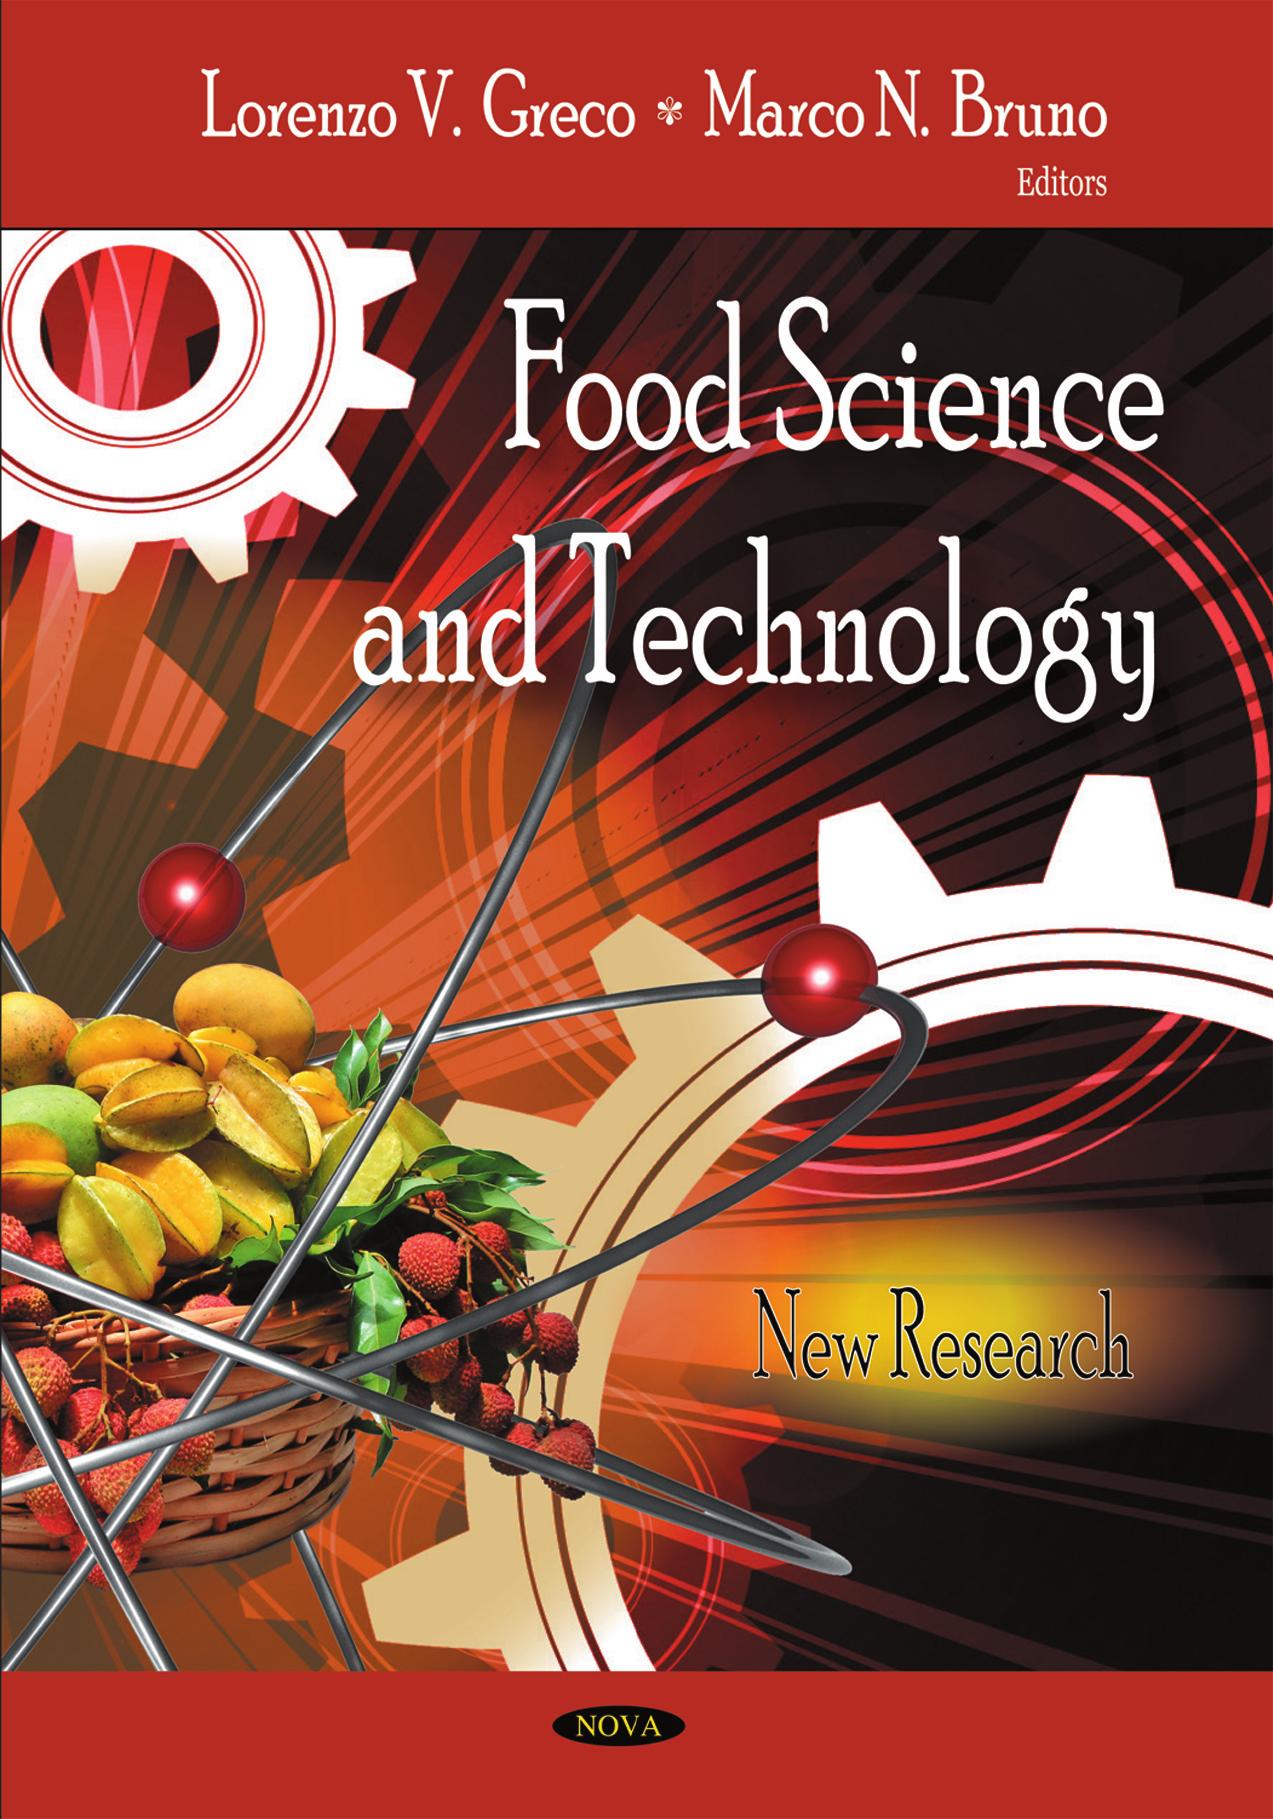 Microsoft Word - Food, Science & Technology - temp.doc